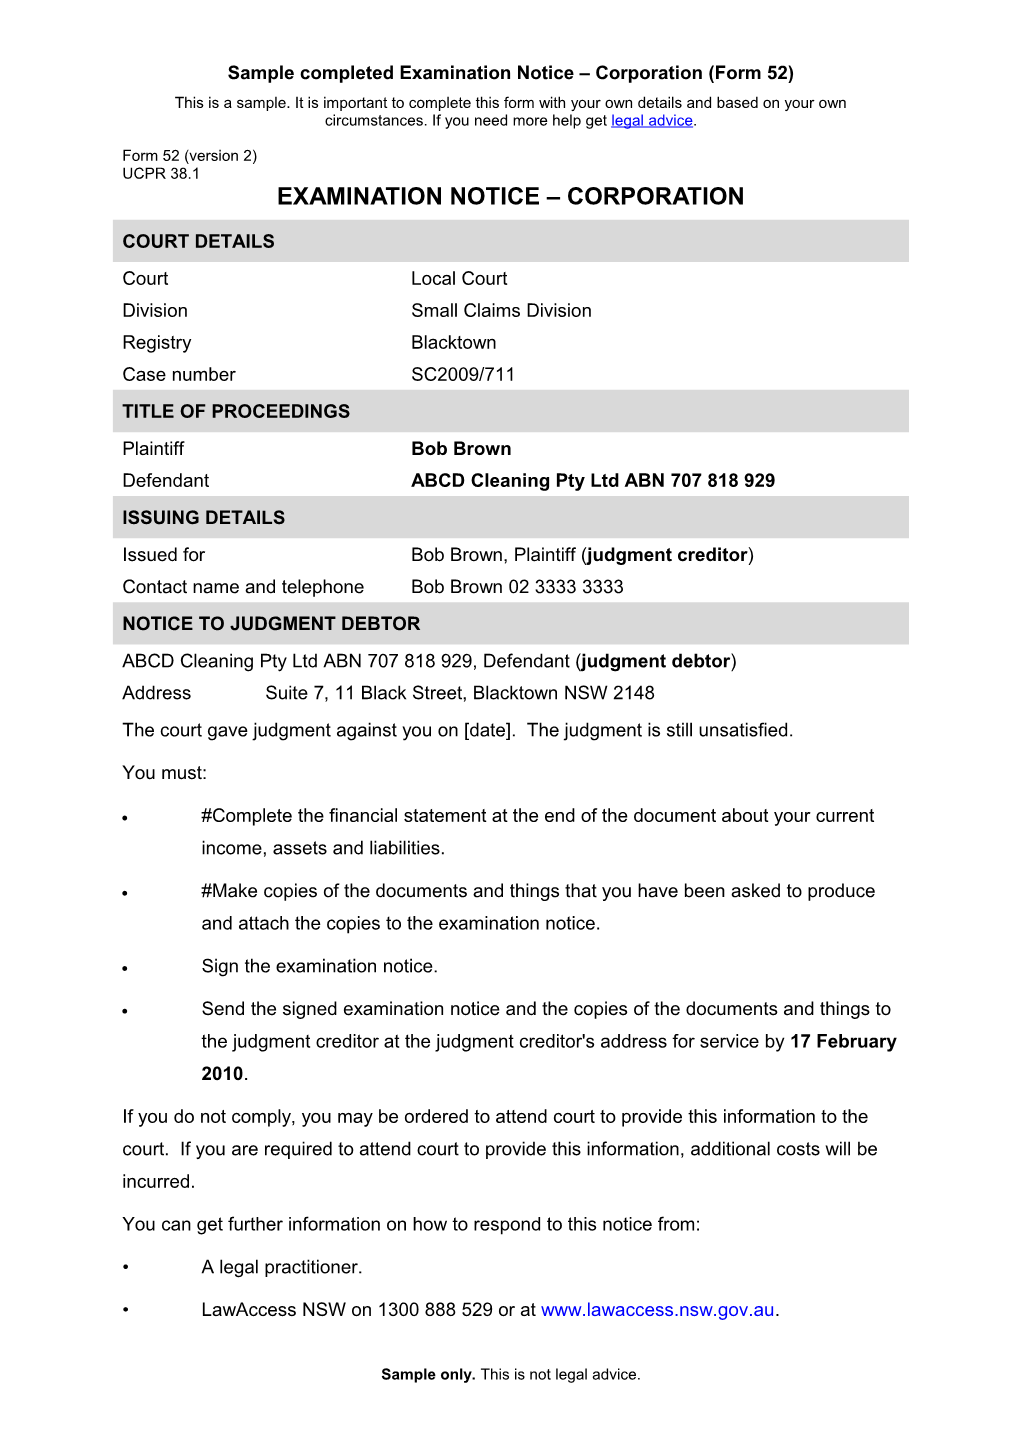 NSW UCPR Form 52 - Examination Notice - Corporation